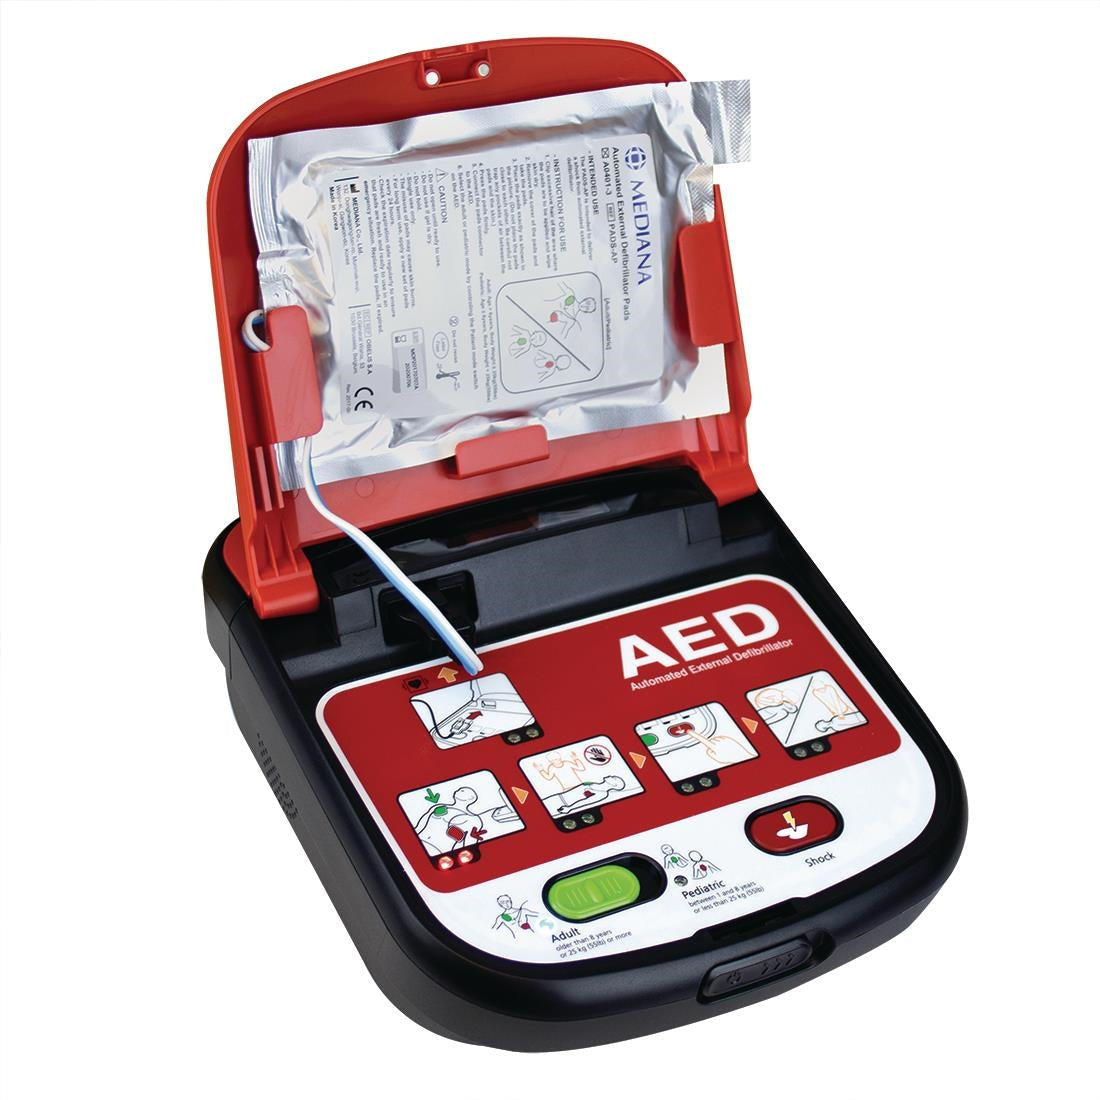 CH789 Mediana A15 HeartOn Automated External Defibrillator JD Catering Equipment Solutions Ltd